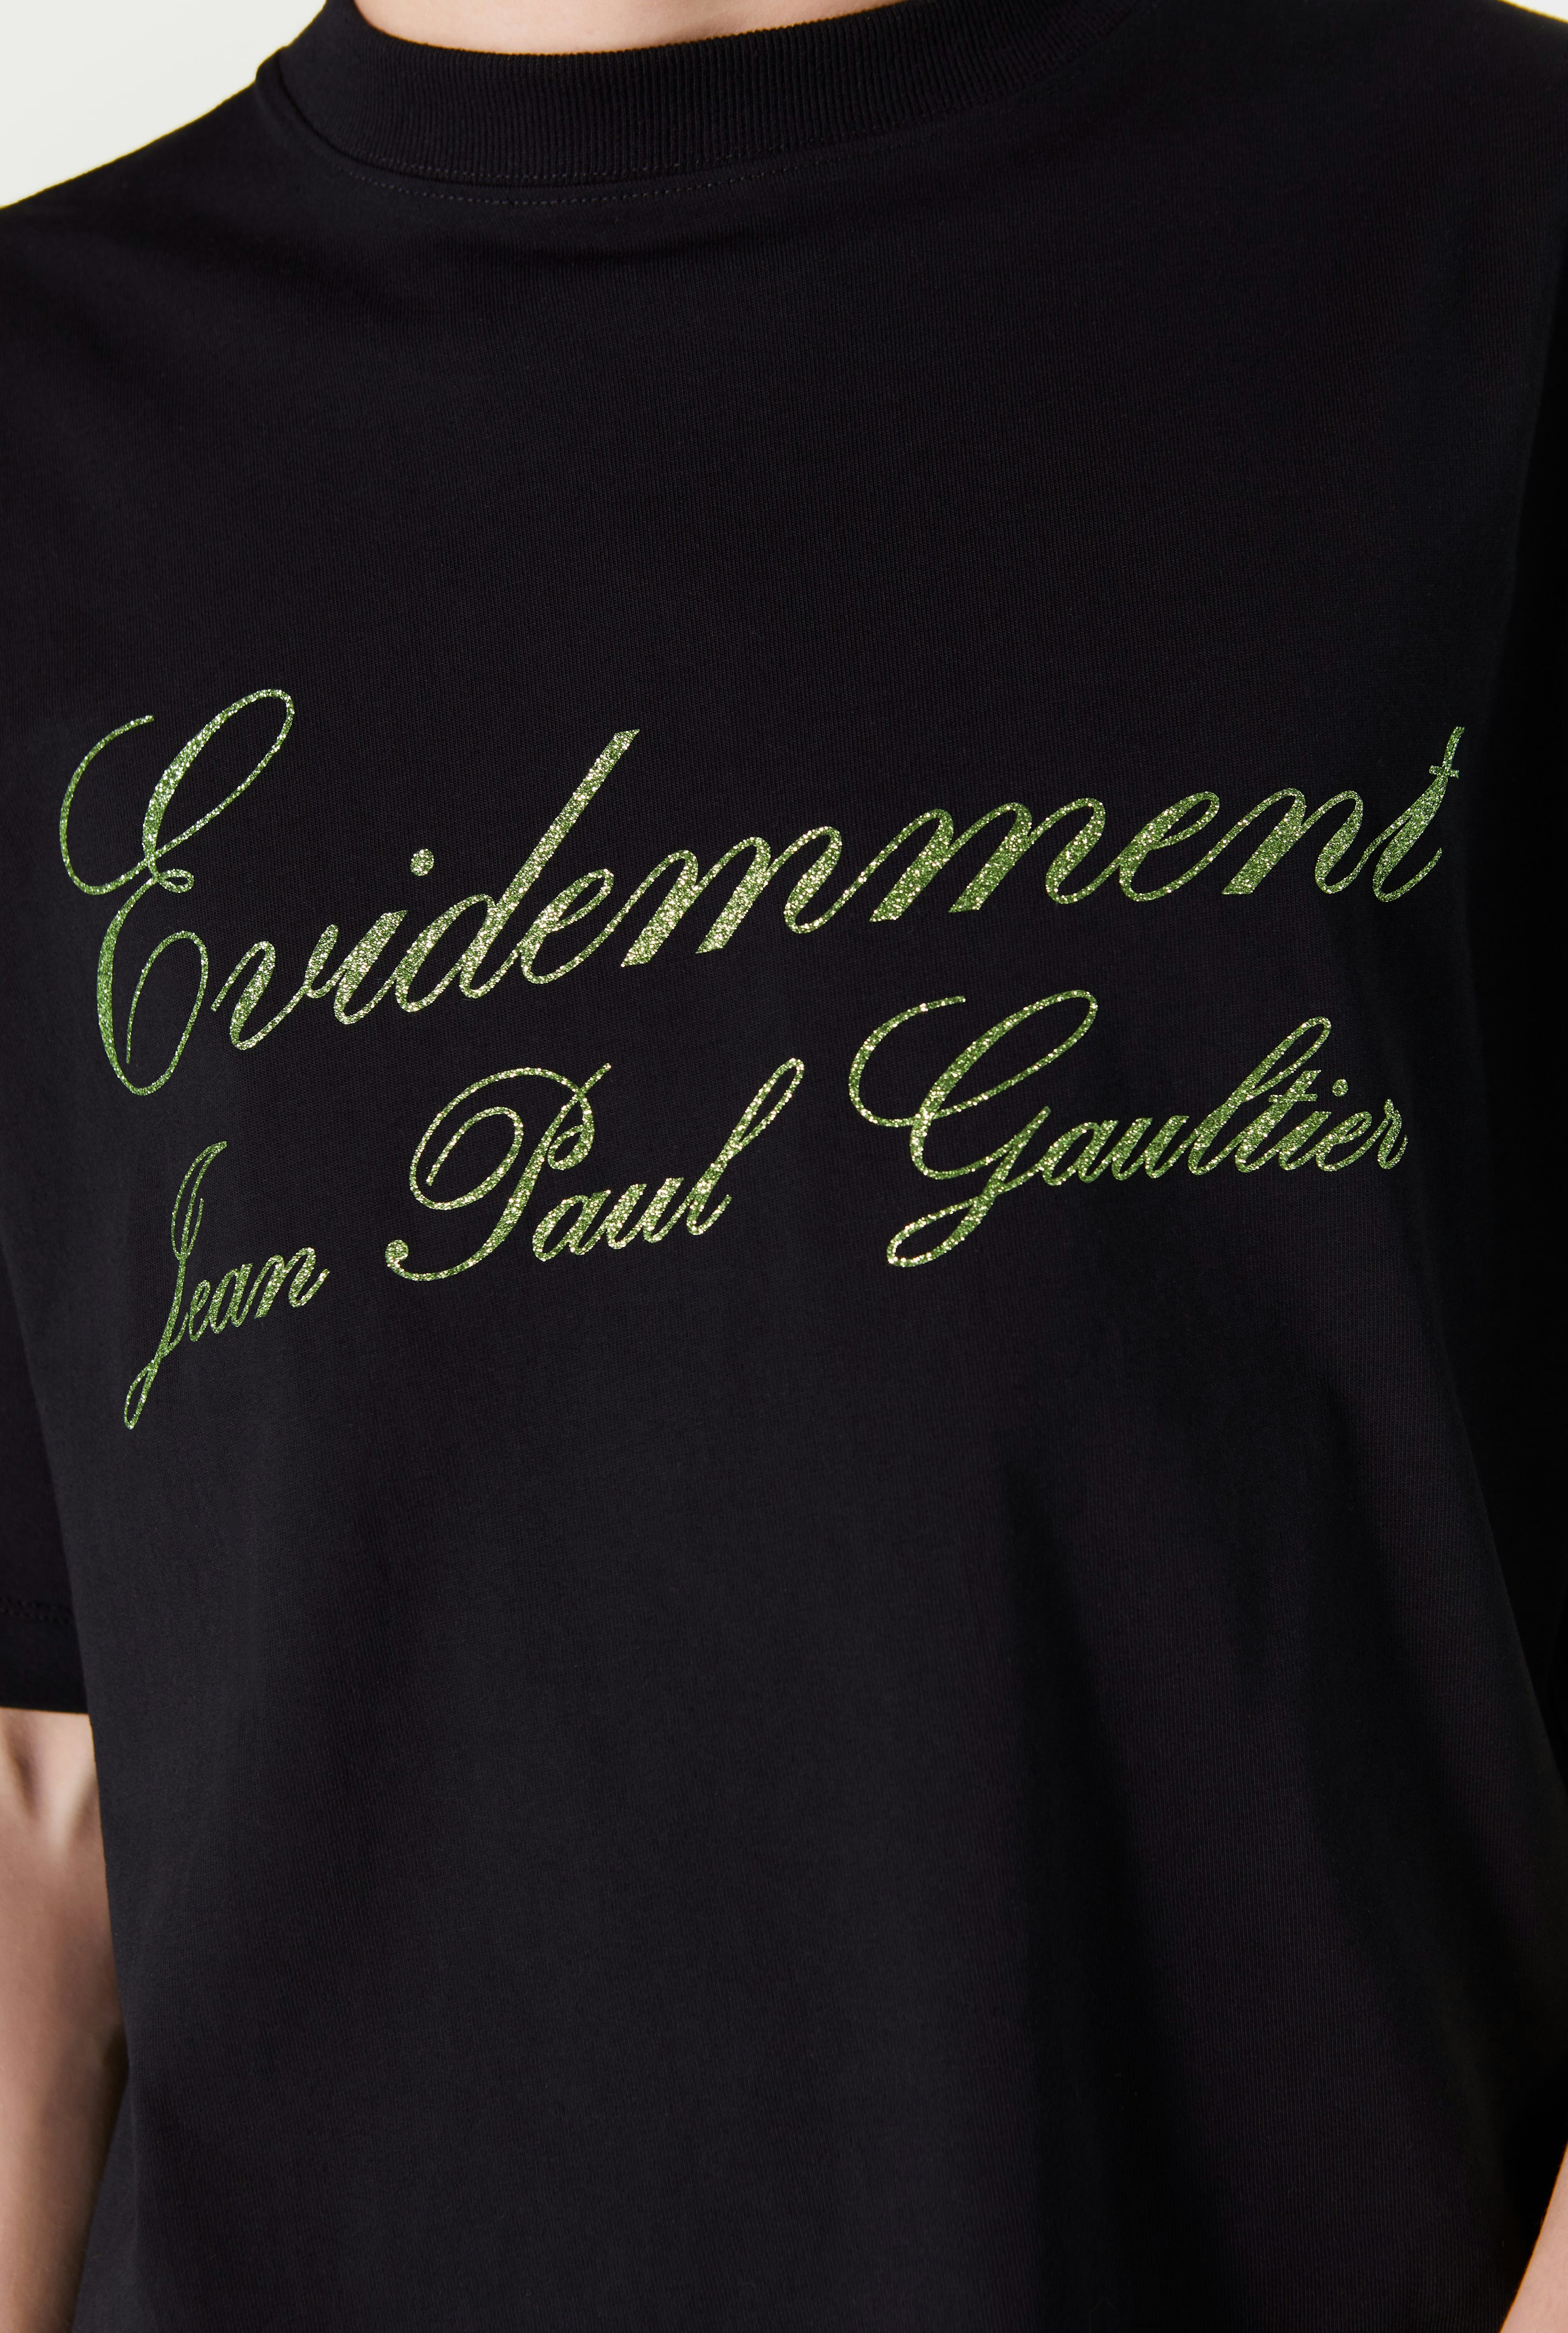 The Black Évidemment T-Shirt Jean Paul Gaultier